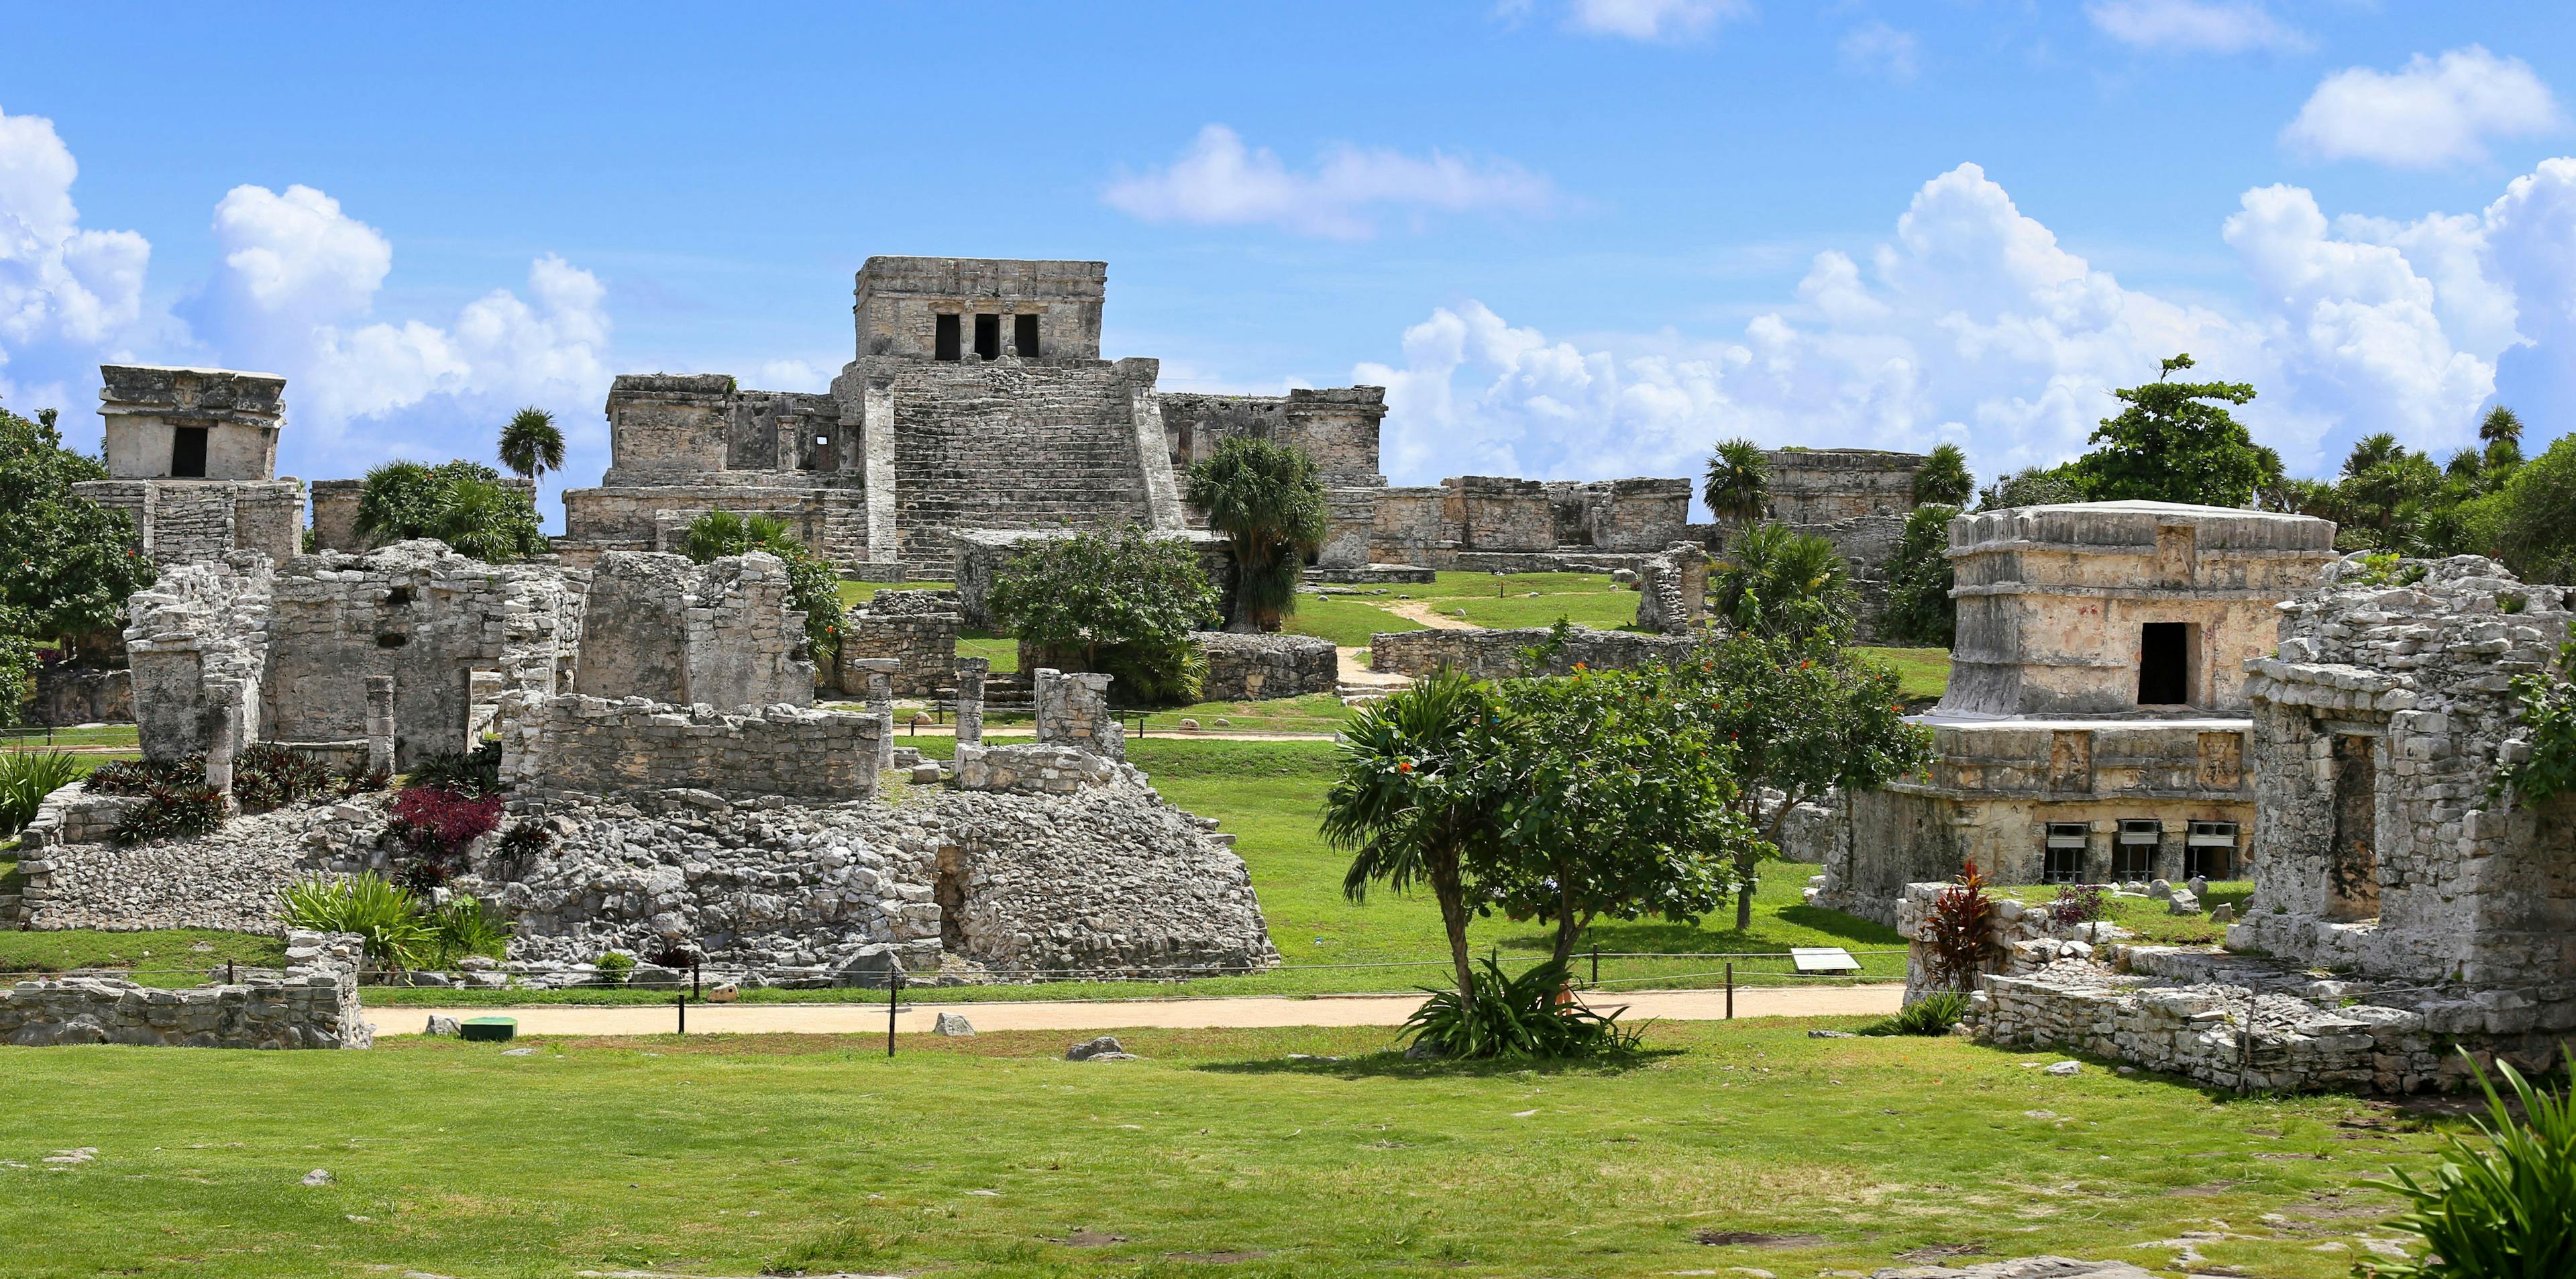 The Tulum Ruins, Mexico